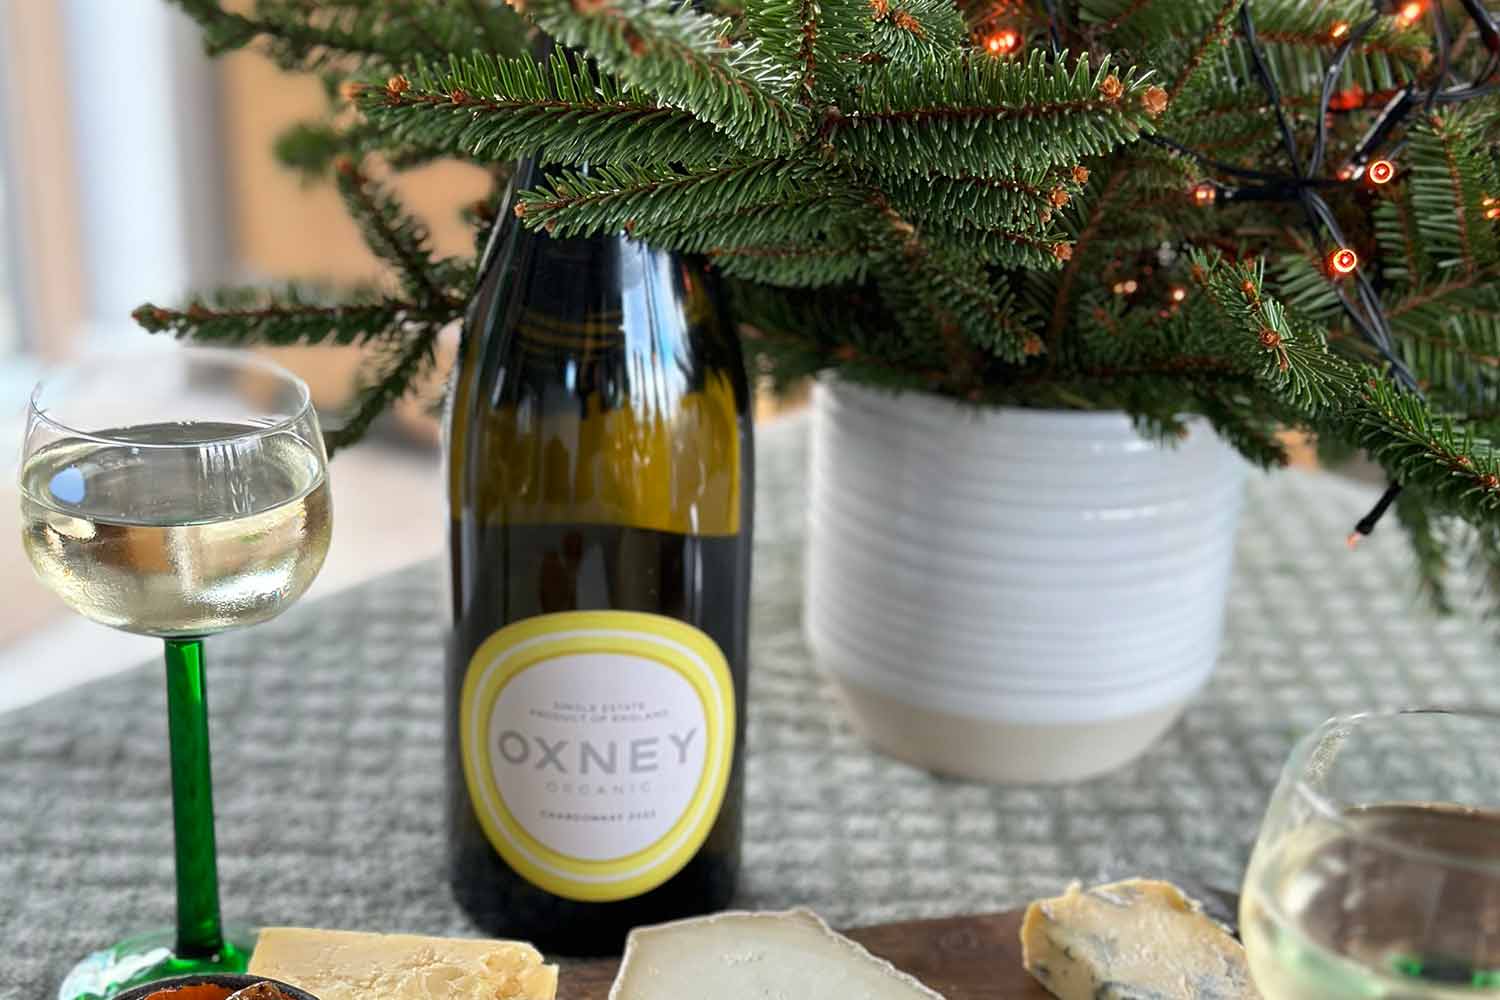 Oxney Organic Estate English Chardonnay